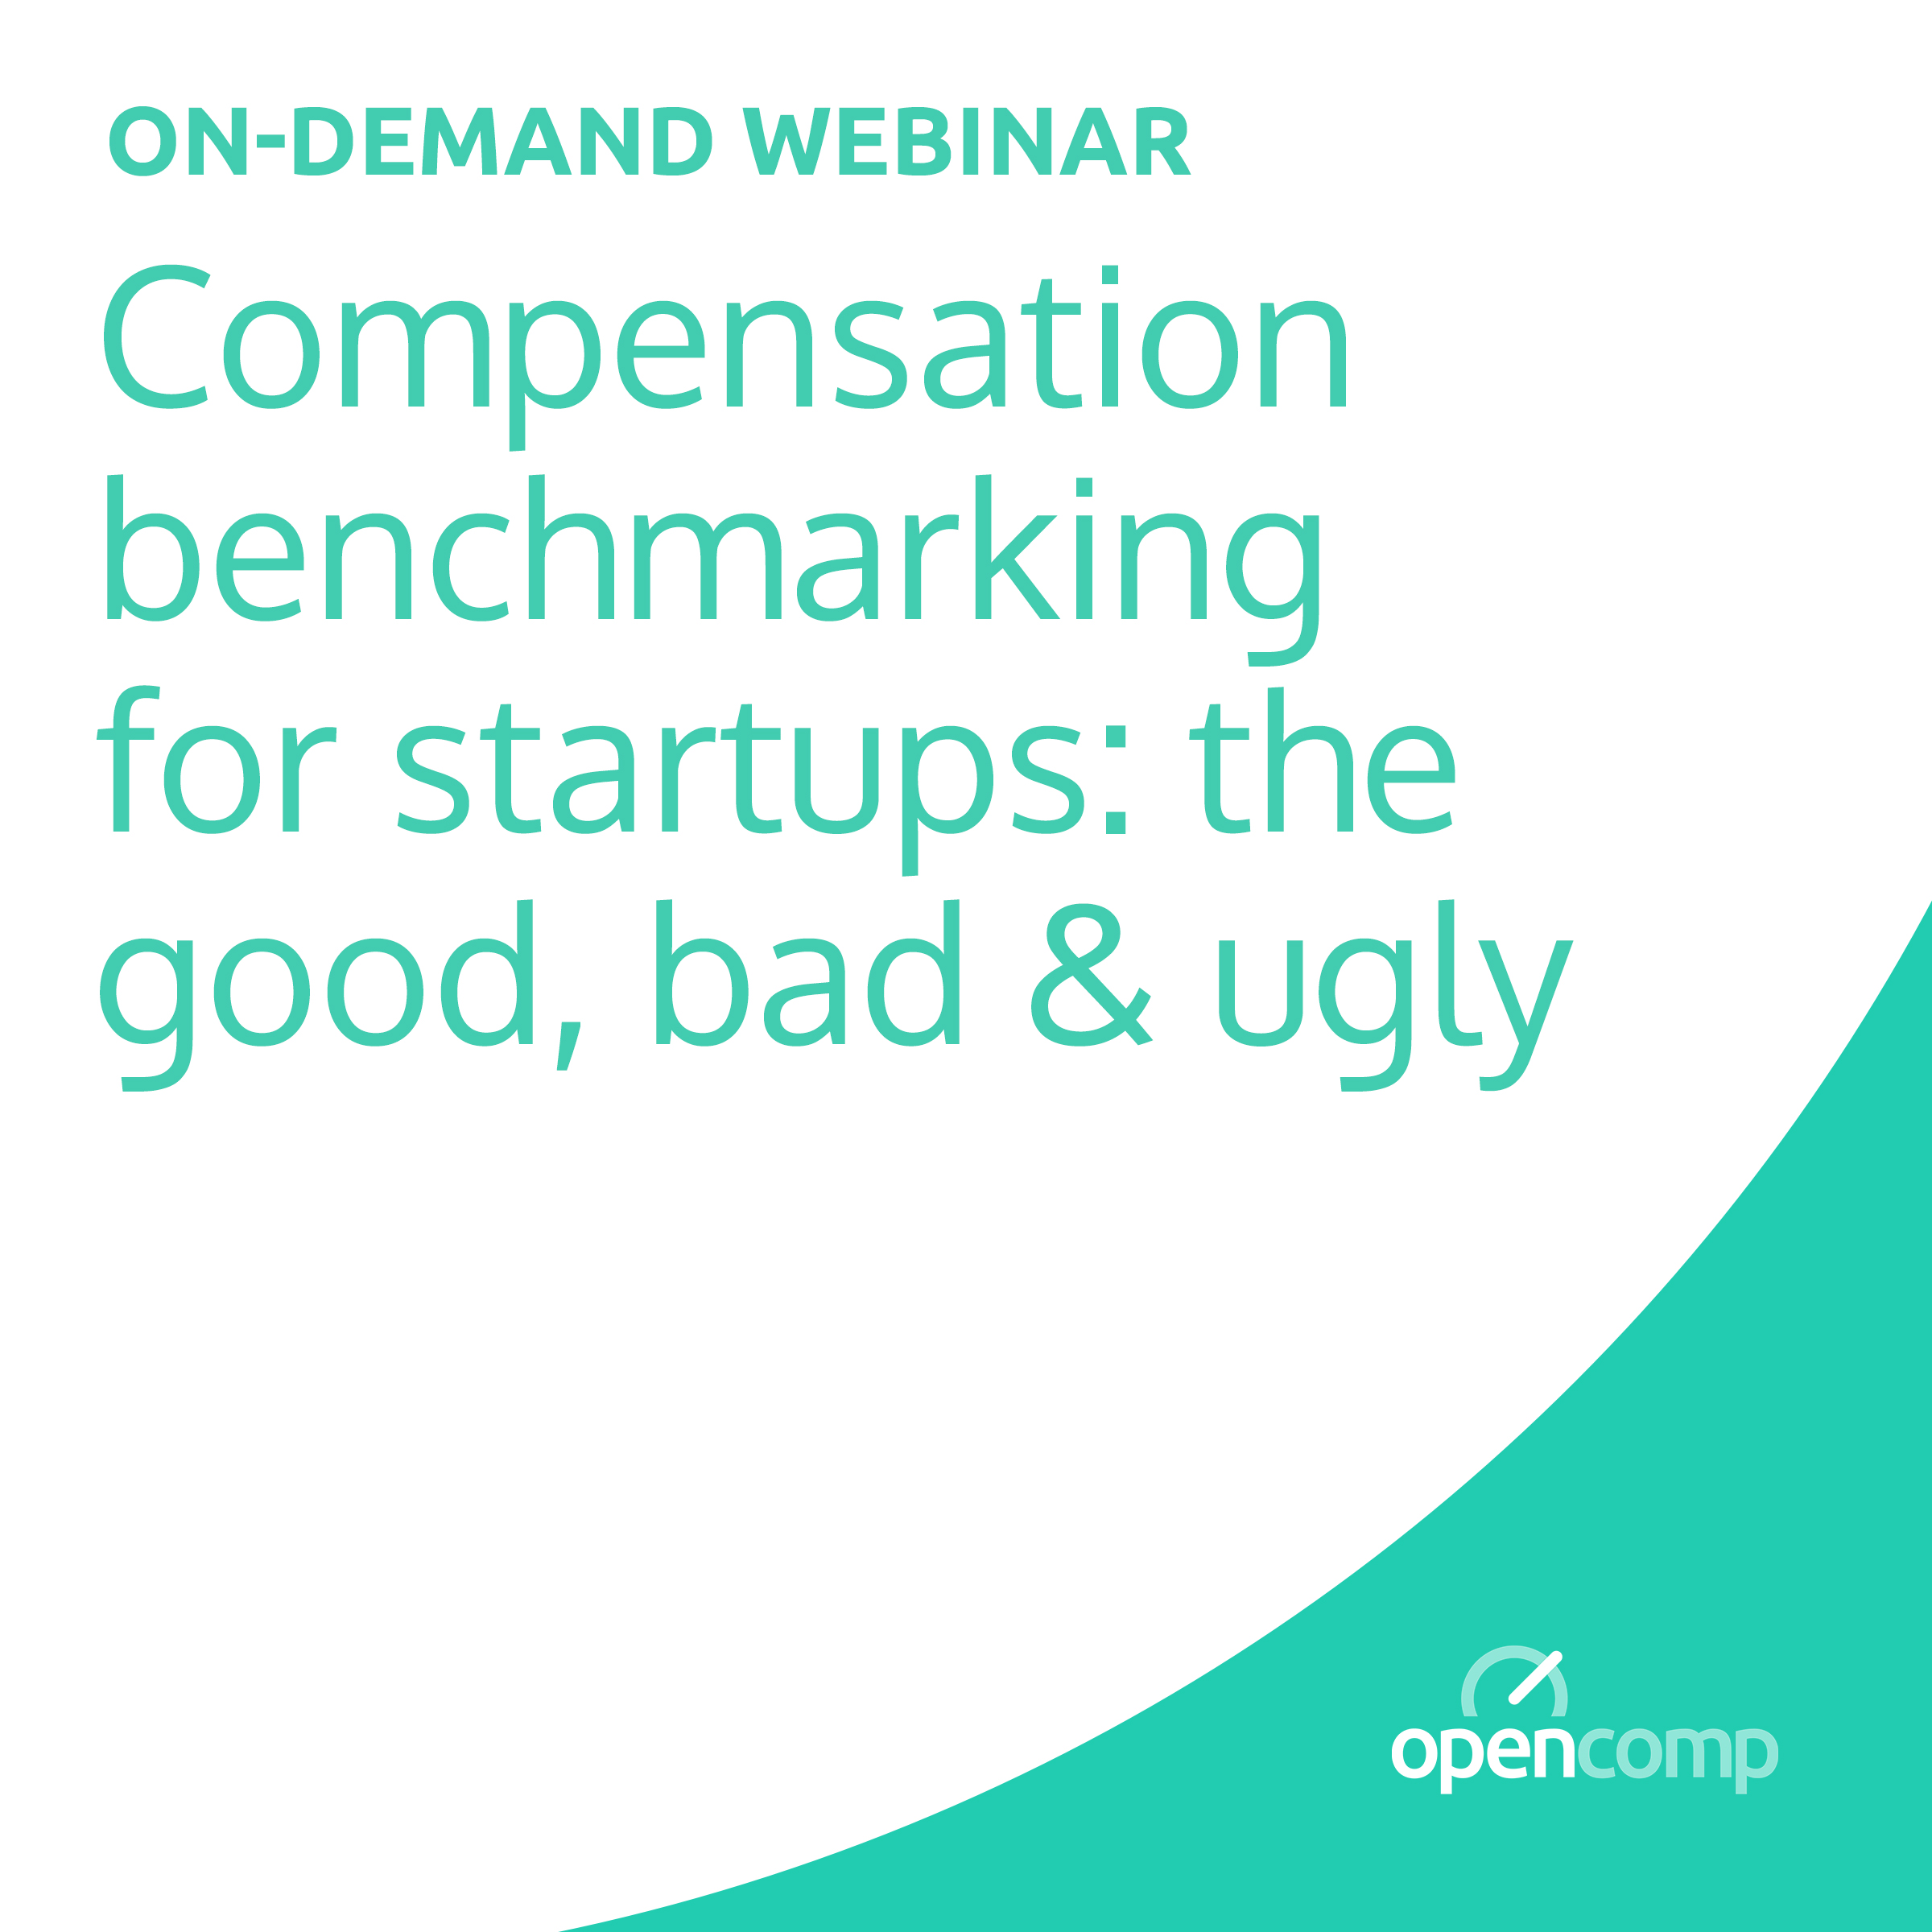 On-Demand Webinar: Compensation Benchmarking for Startups: The Good, Bad & Ugly